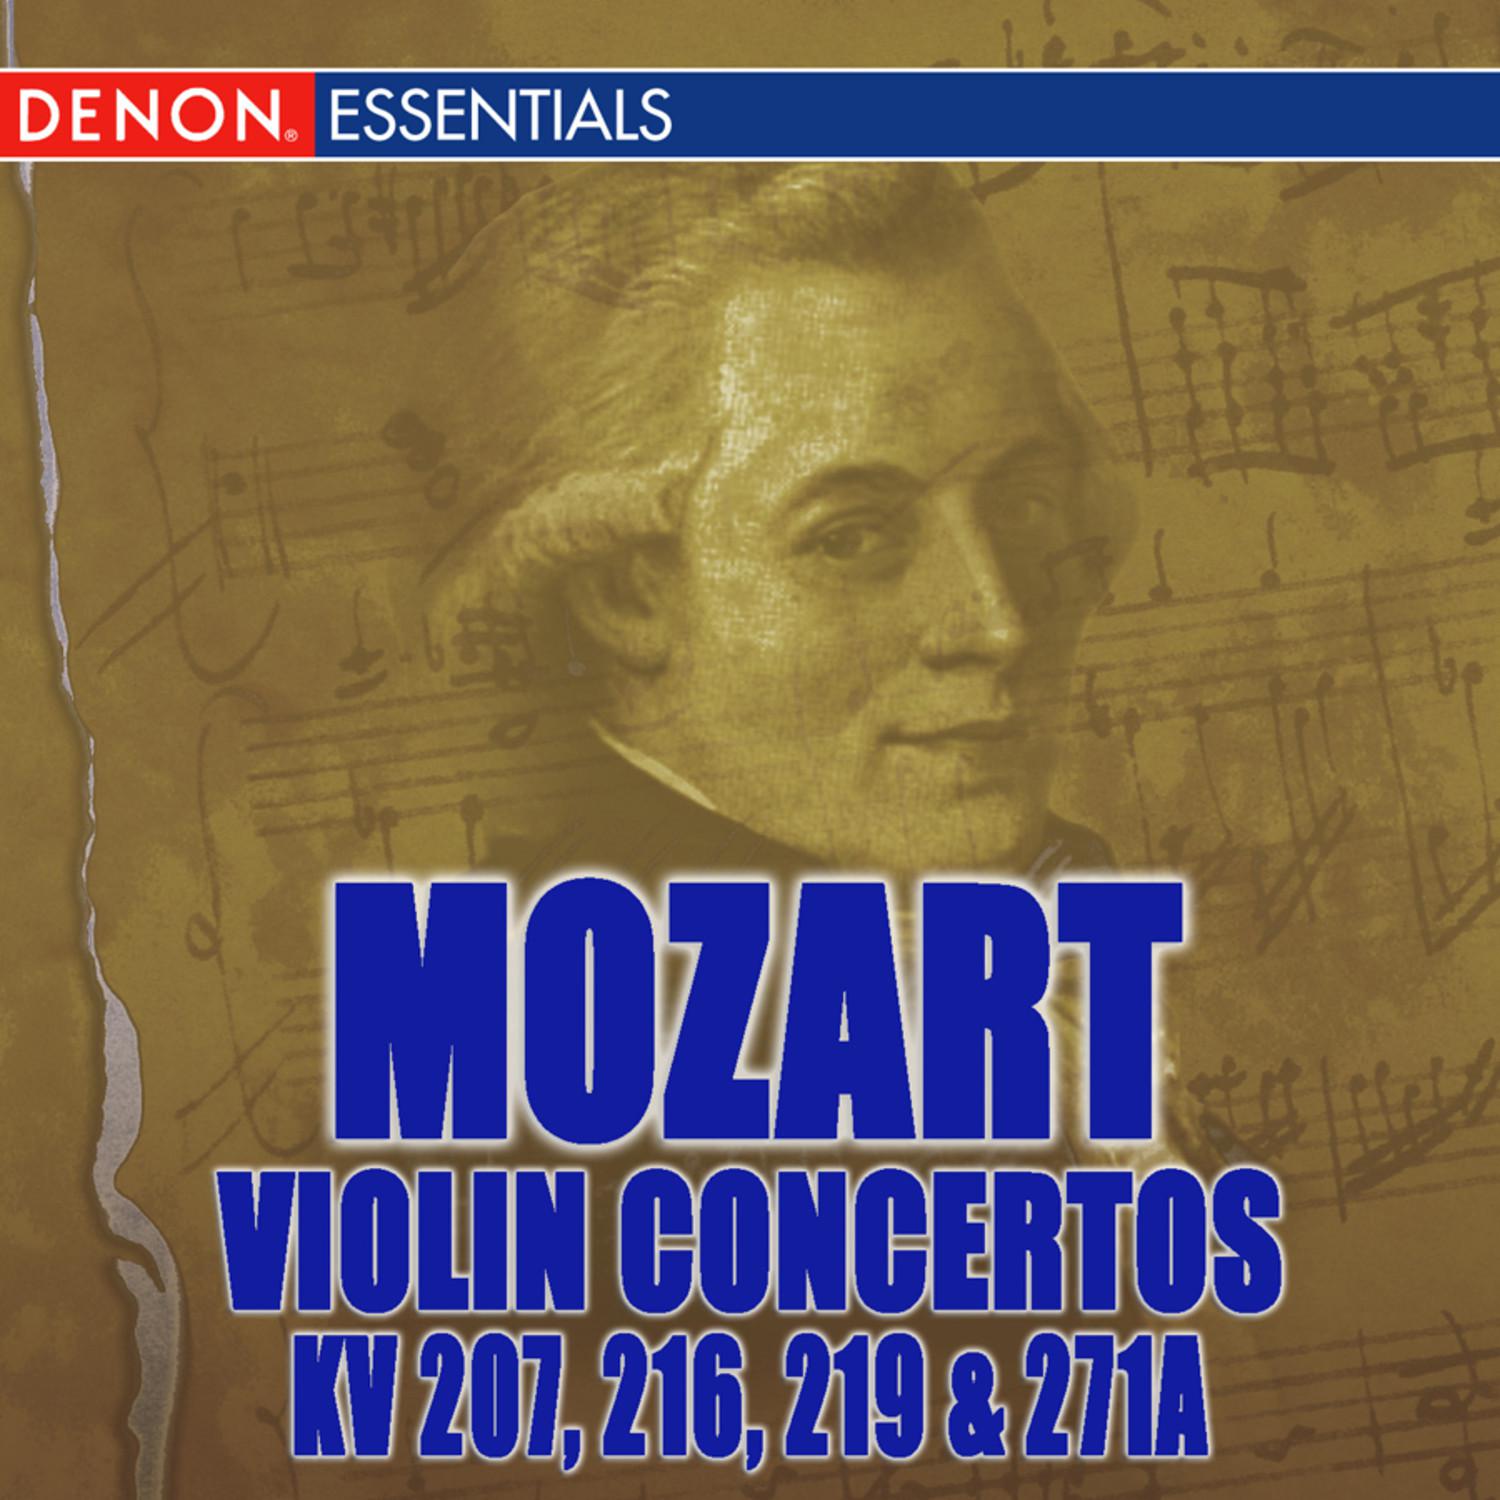 Violin Concerto No. 1 in B-Flat Major K. 207: I. Allegro moderato